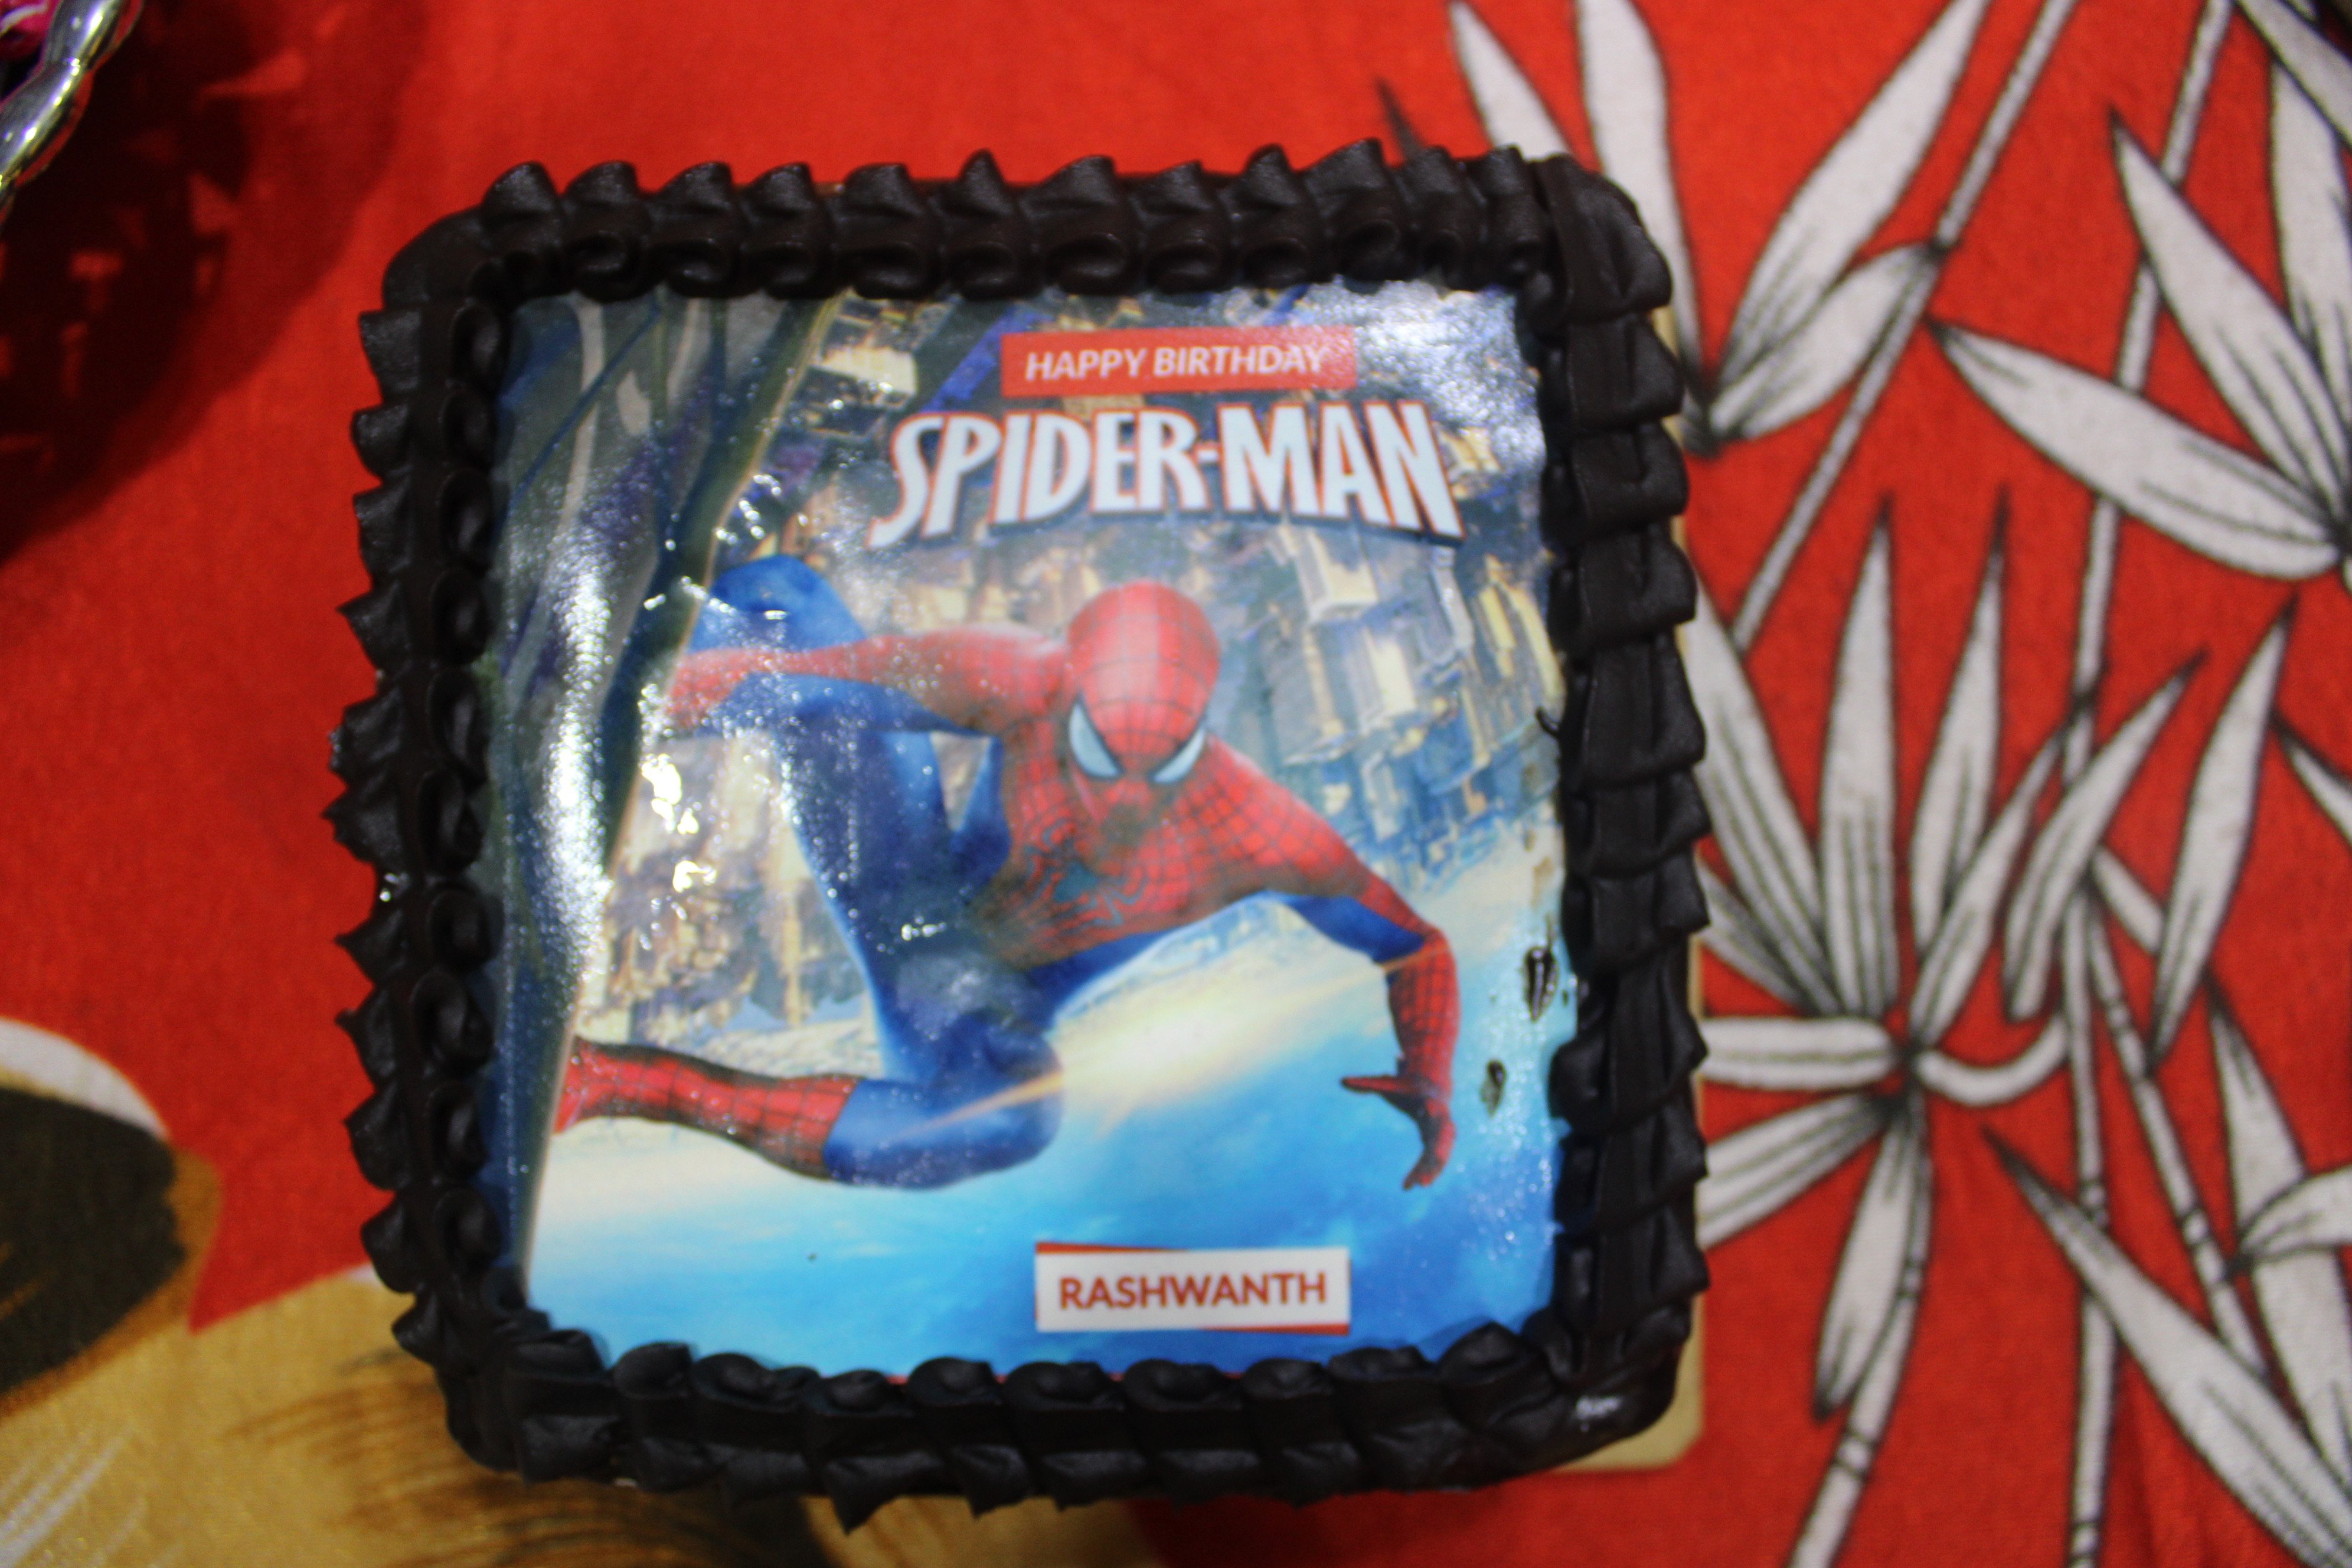 1/4 Sheet Spiderman Edible image Cake topper decoration -7.5